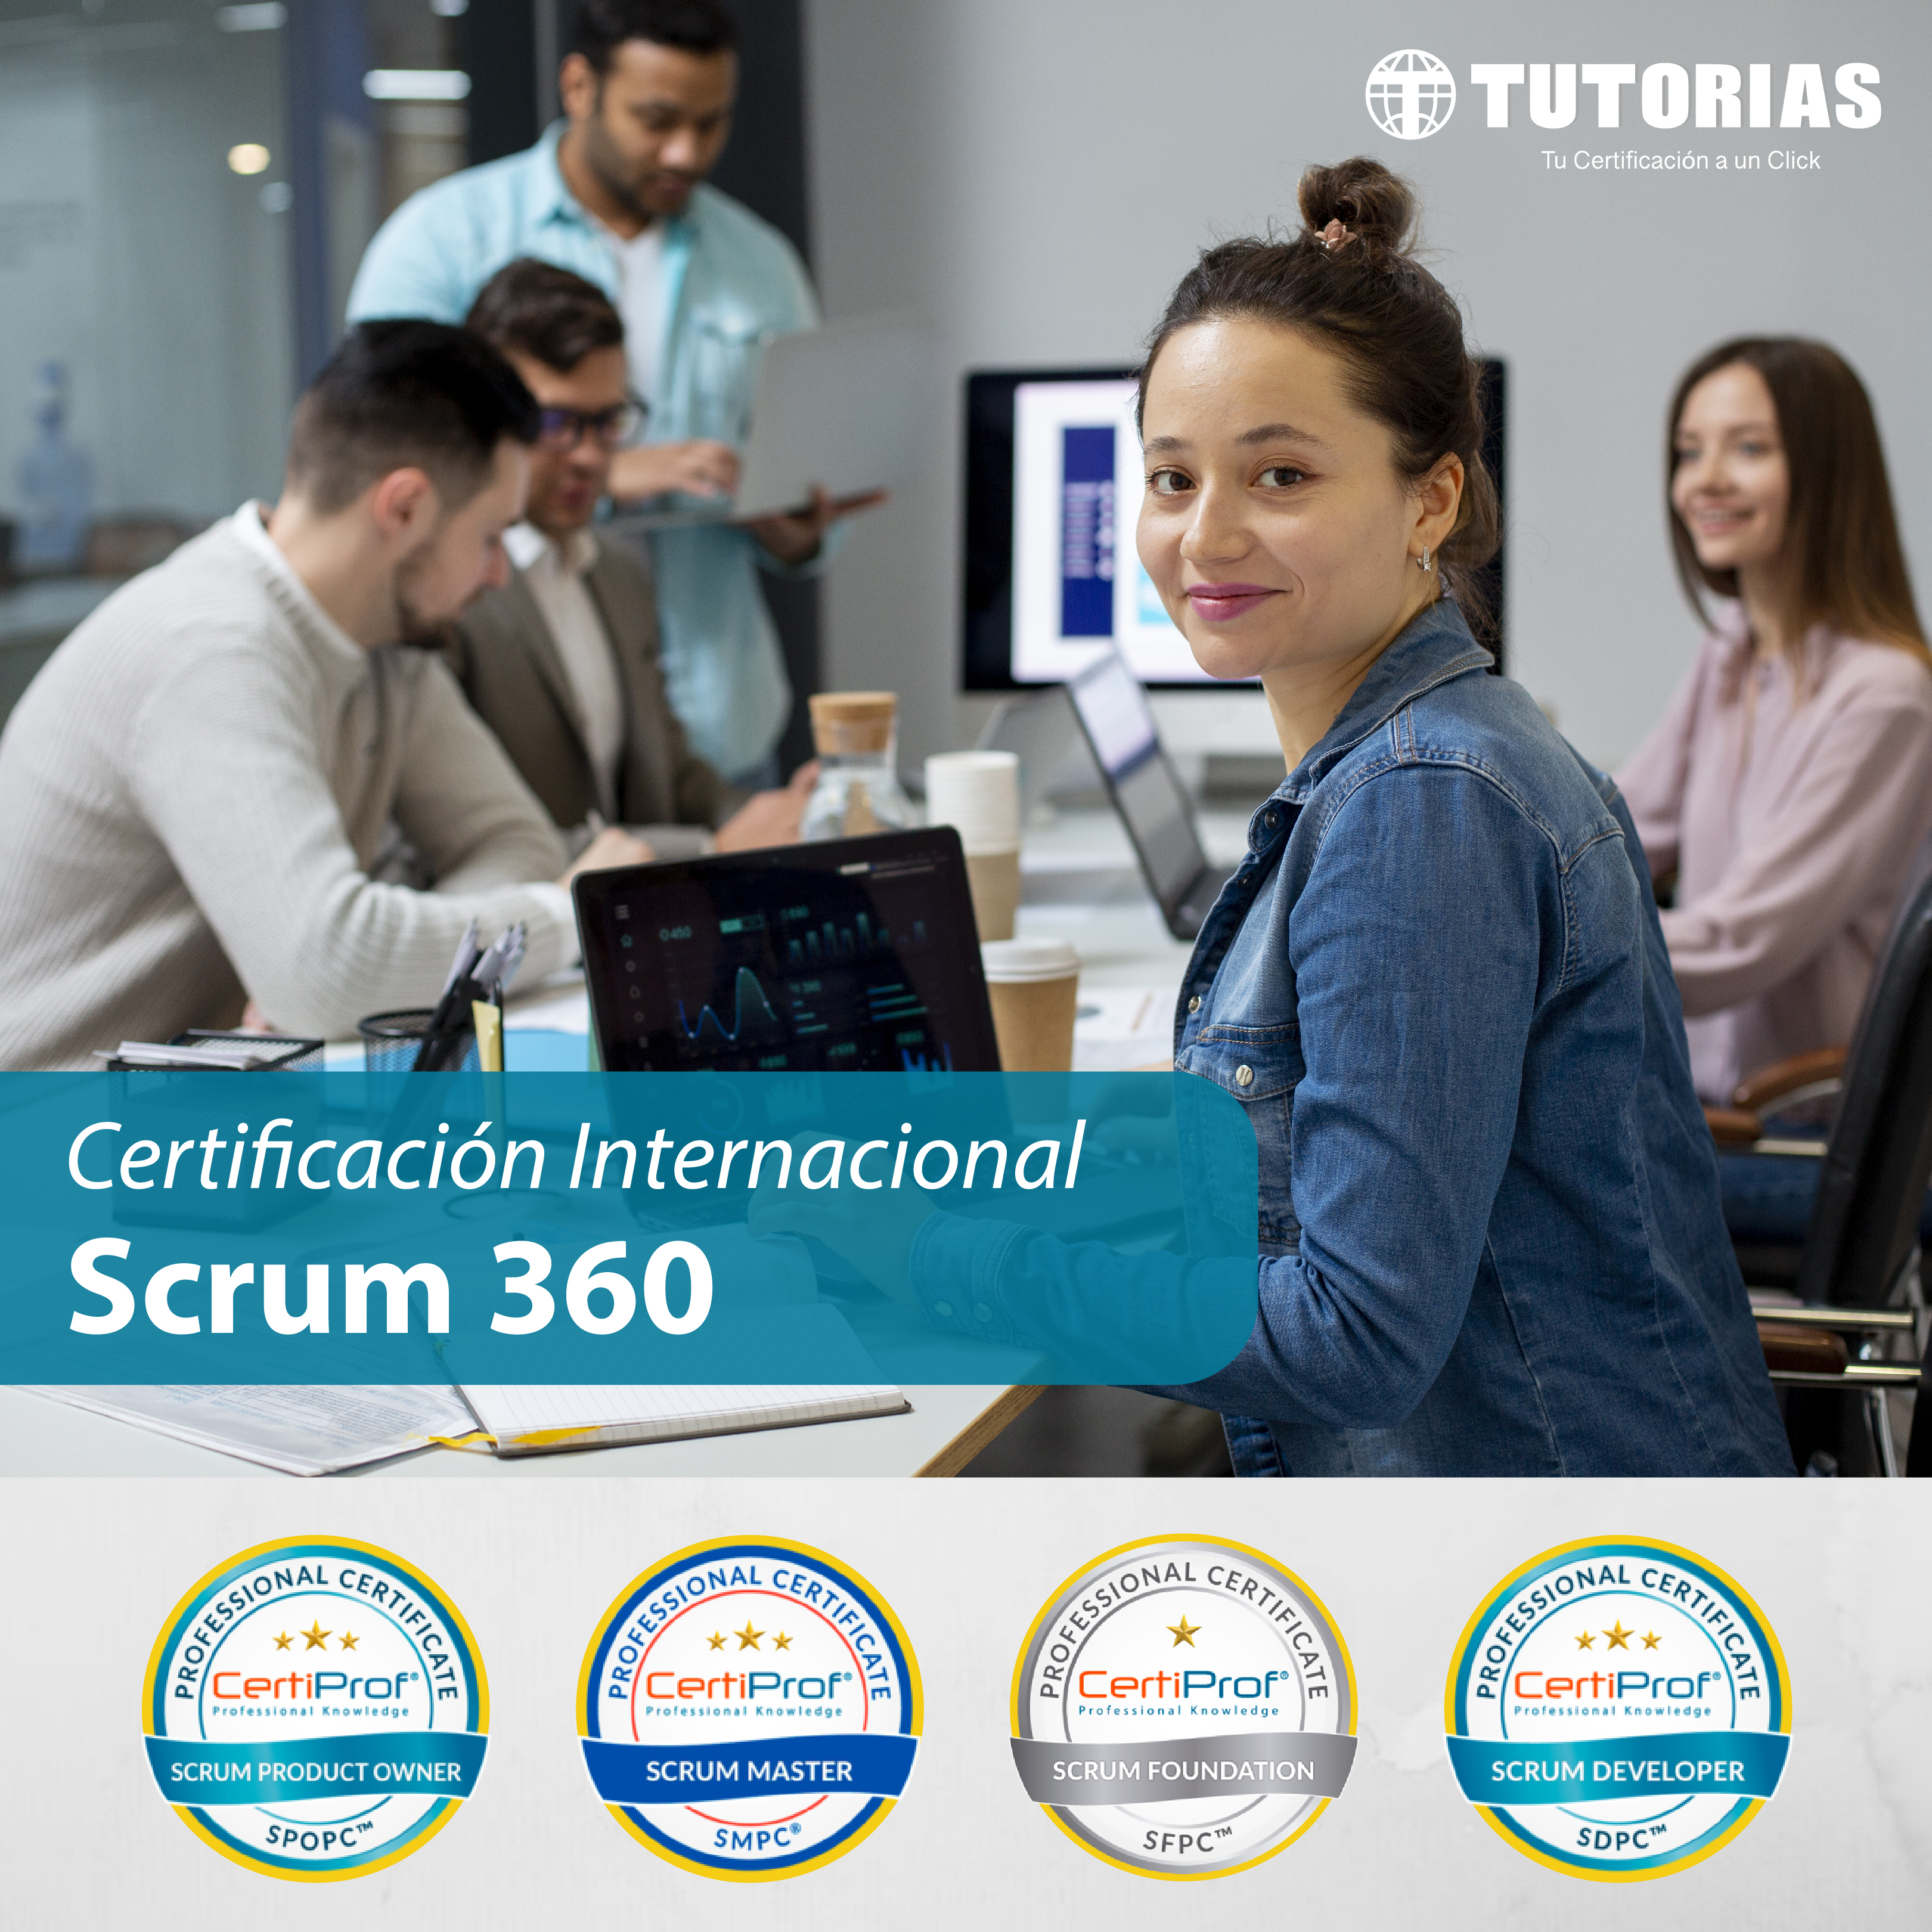 Scrum 360 (Foundation, Master, Product Owner, Developer Team).